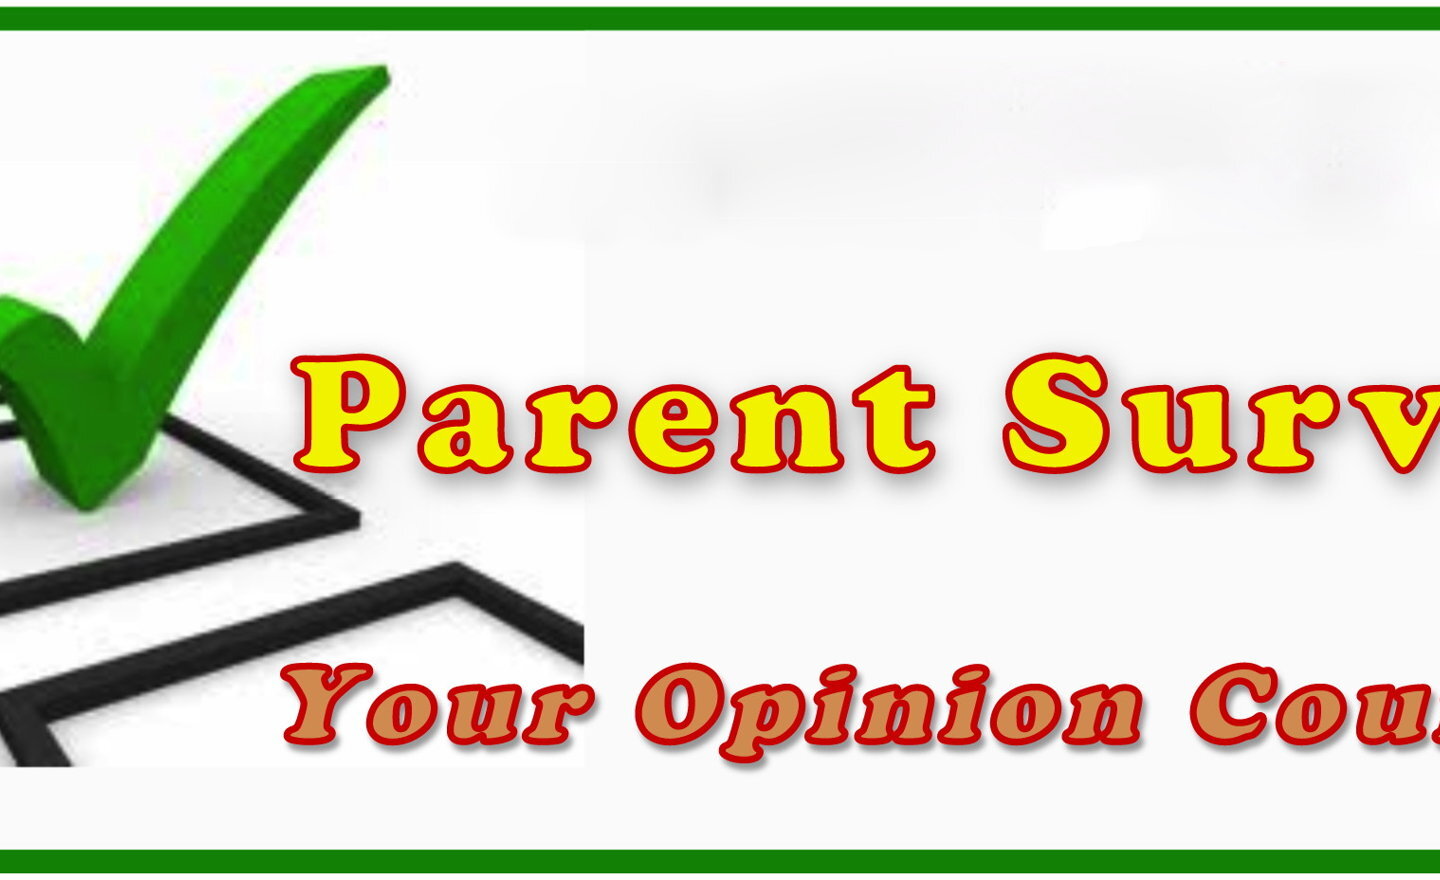 Image of Parent survey results